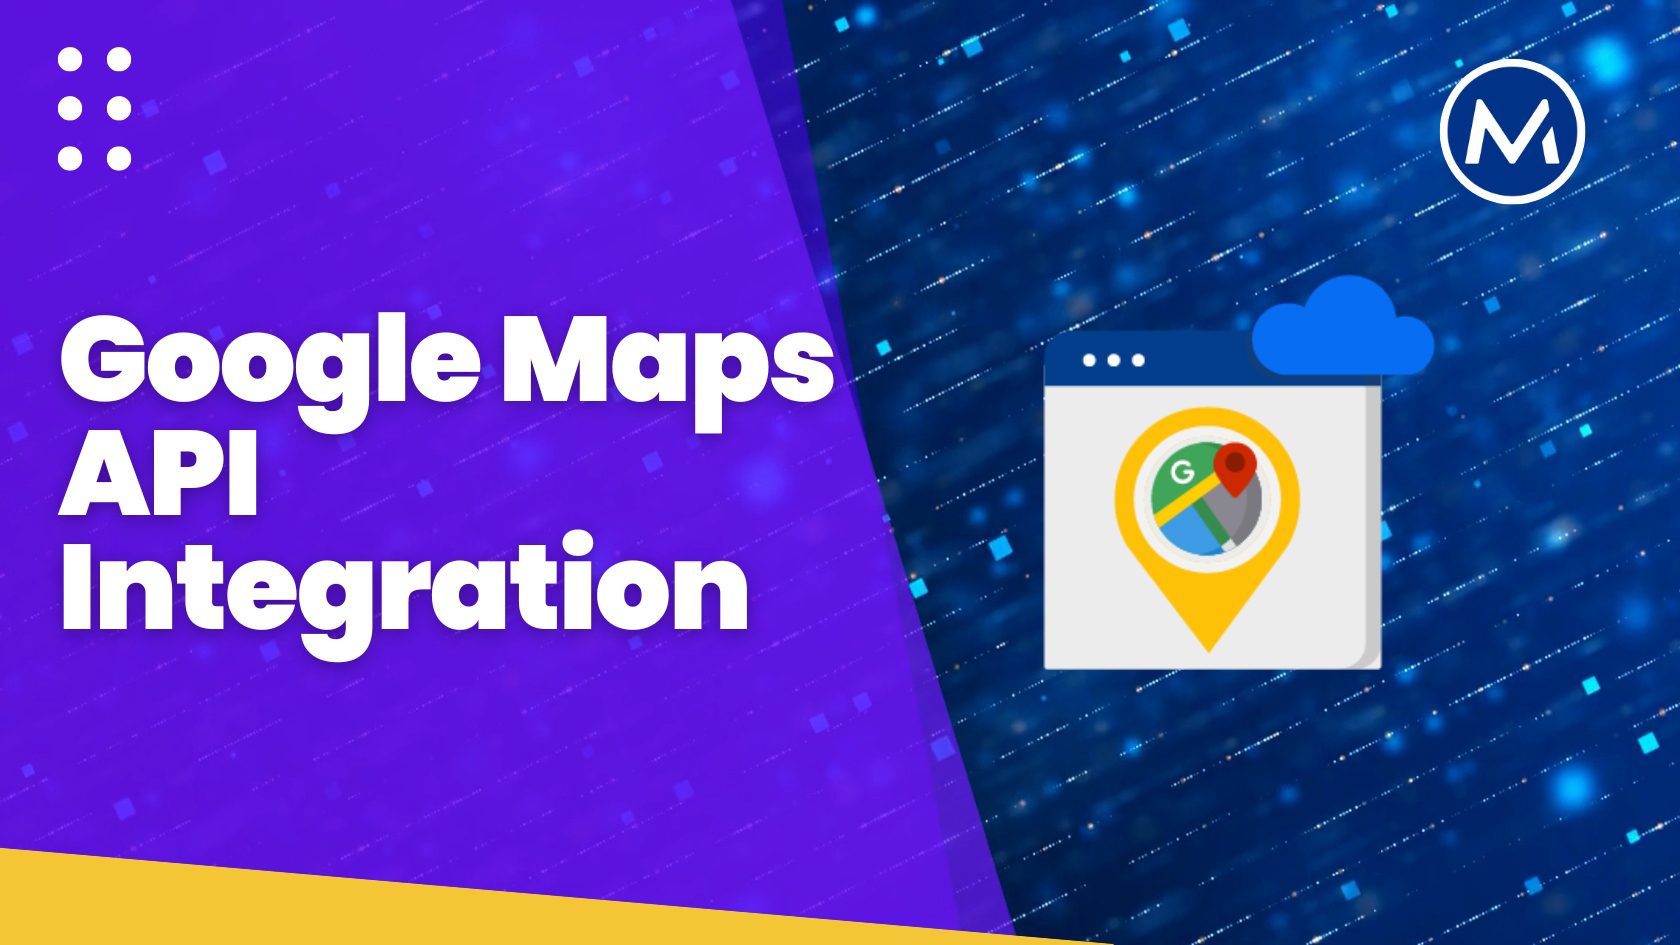 Care Plan Feature - Google Maps API